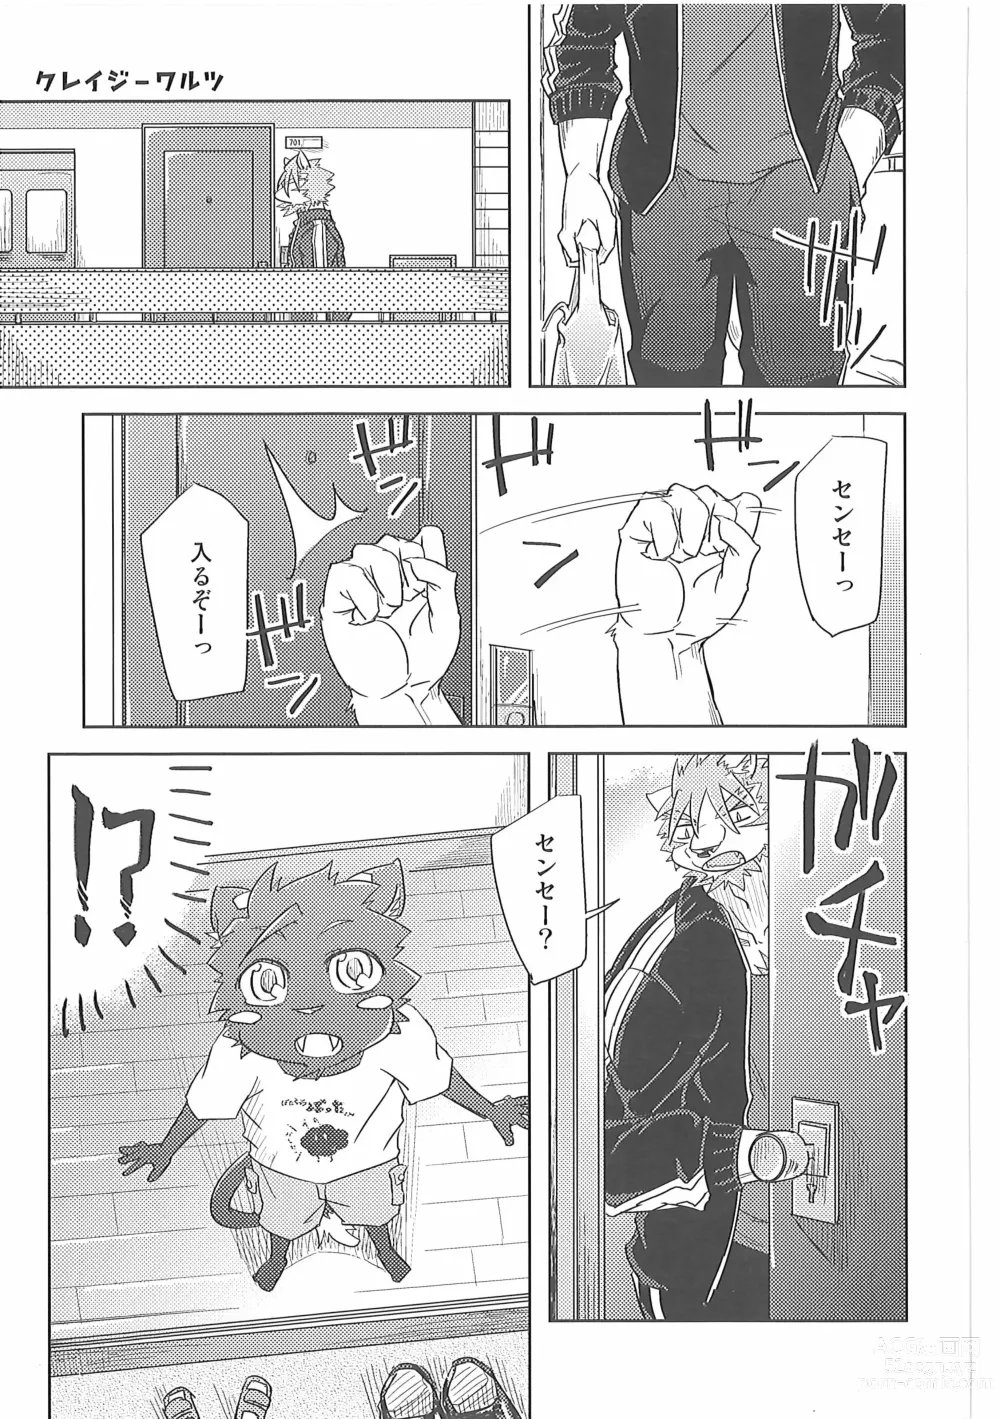 Page 2 of doujinshi Crazy Waltz